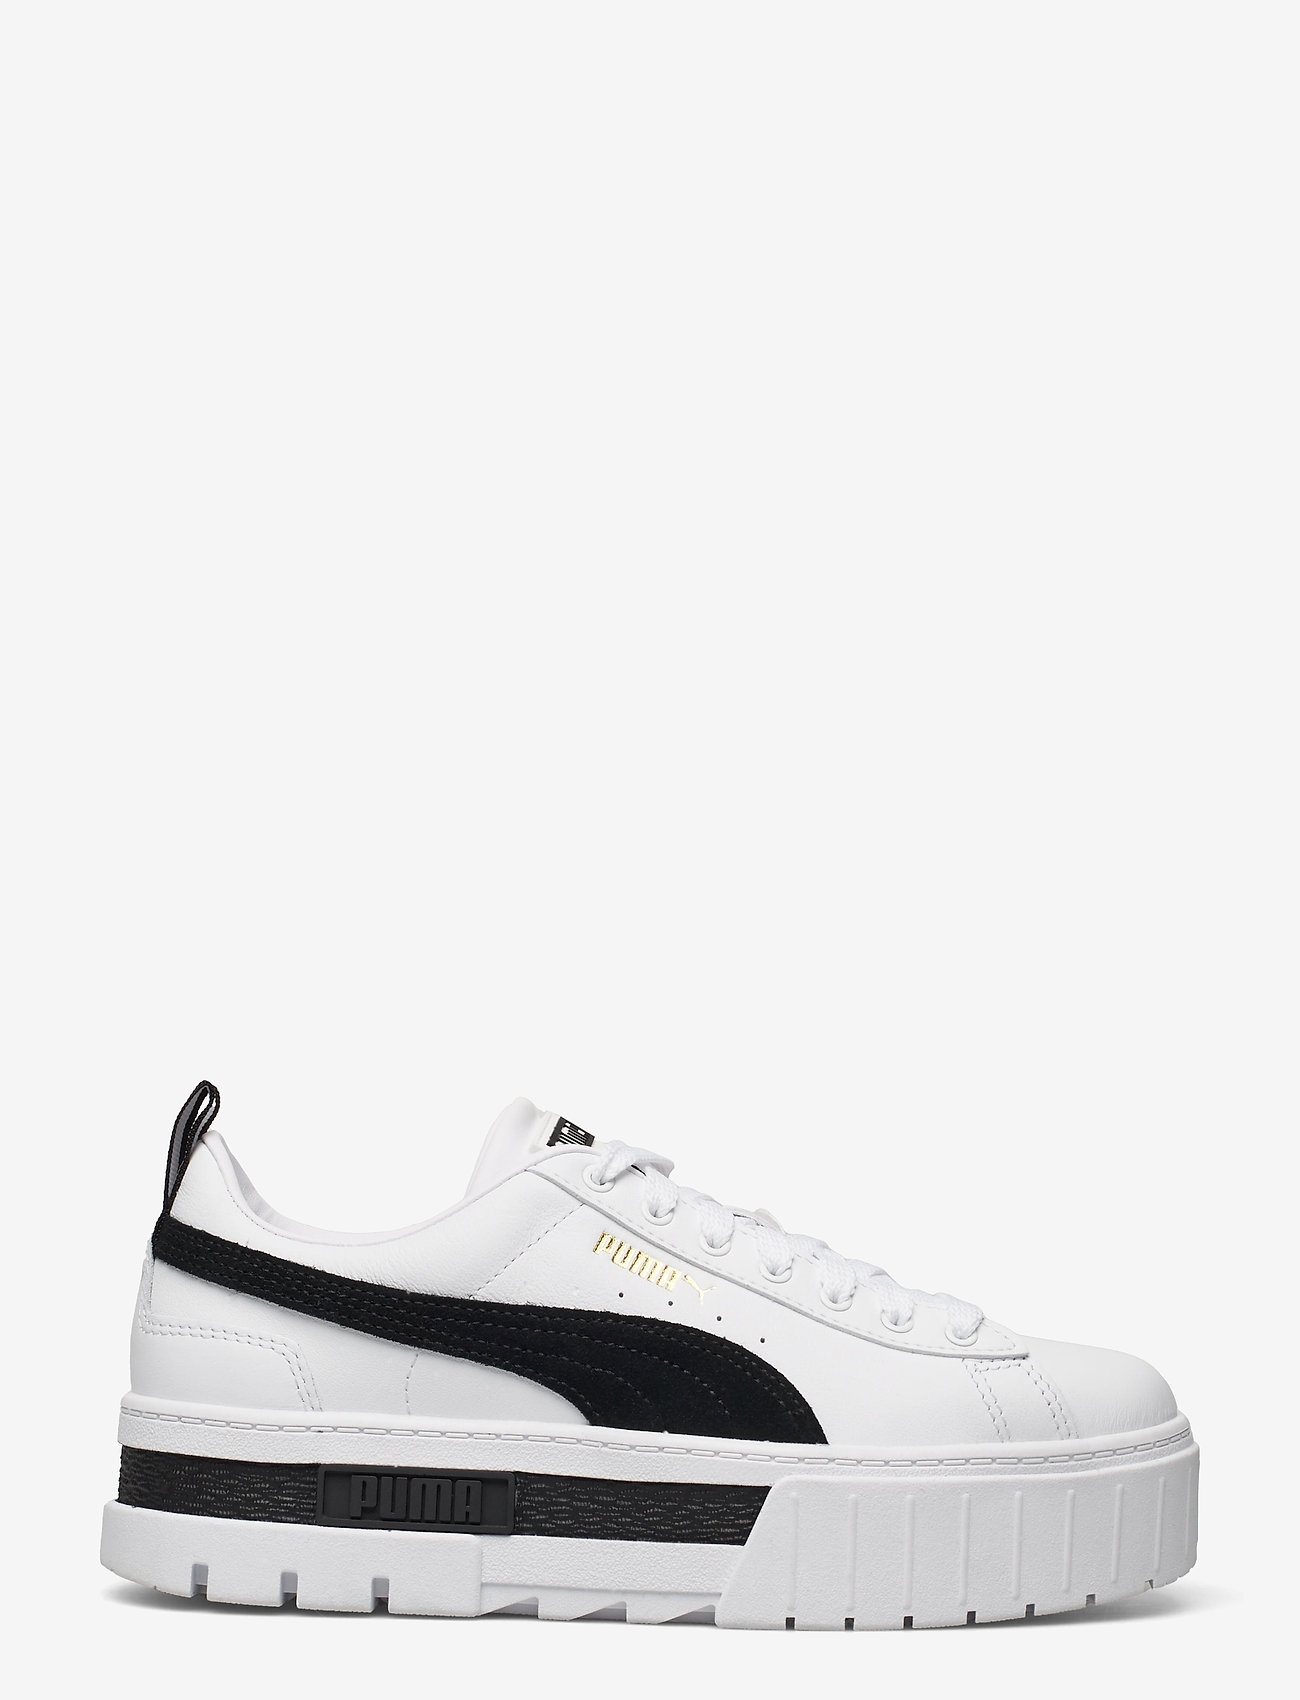 PUMA - Mayze Lth Wn s - chunky sneaker - puma white-puma black - 1